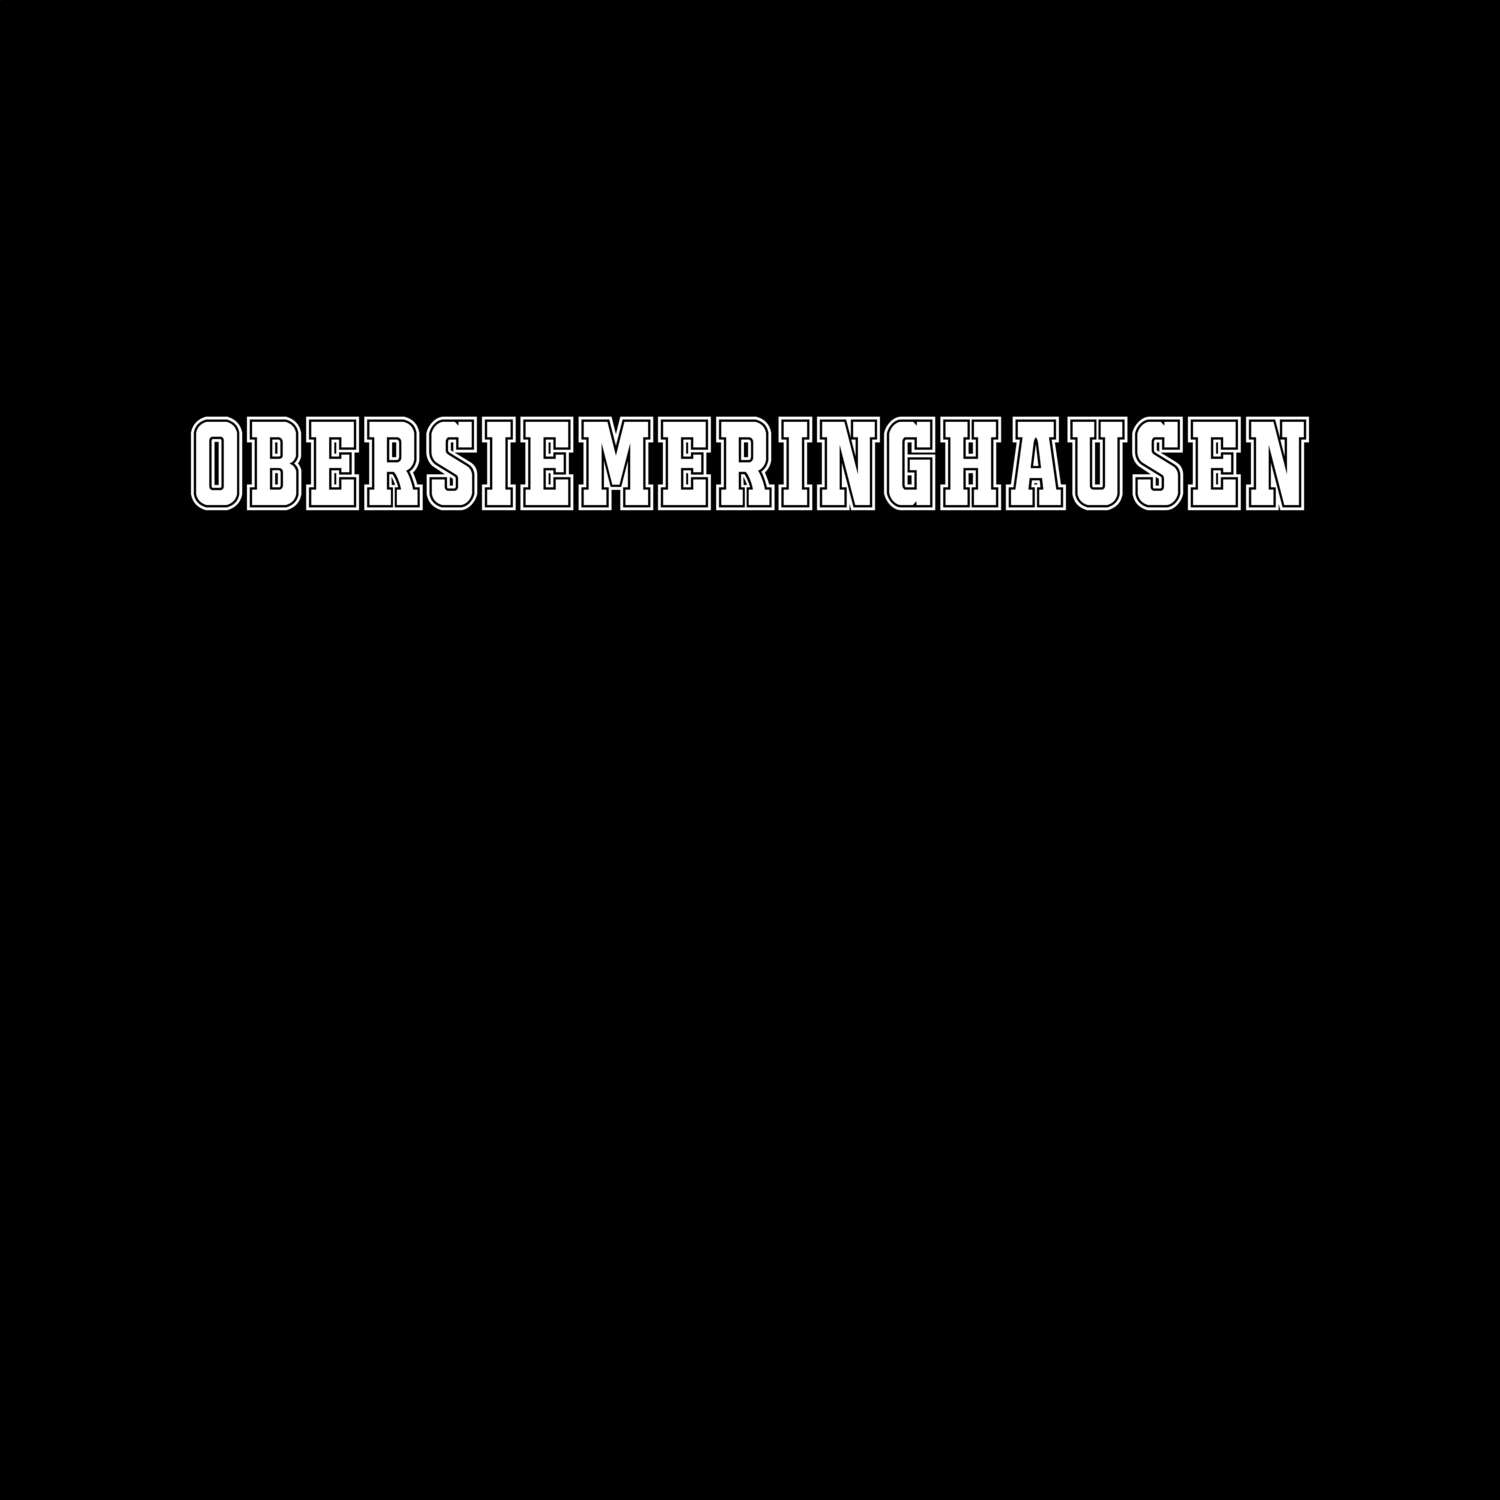 Obersiemeringhausen T-Shirt »Classic«